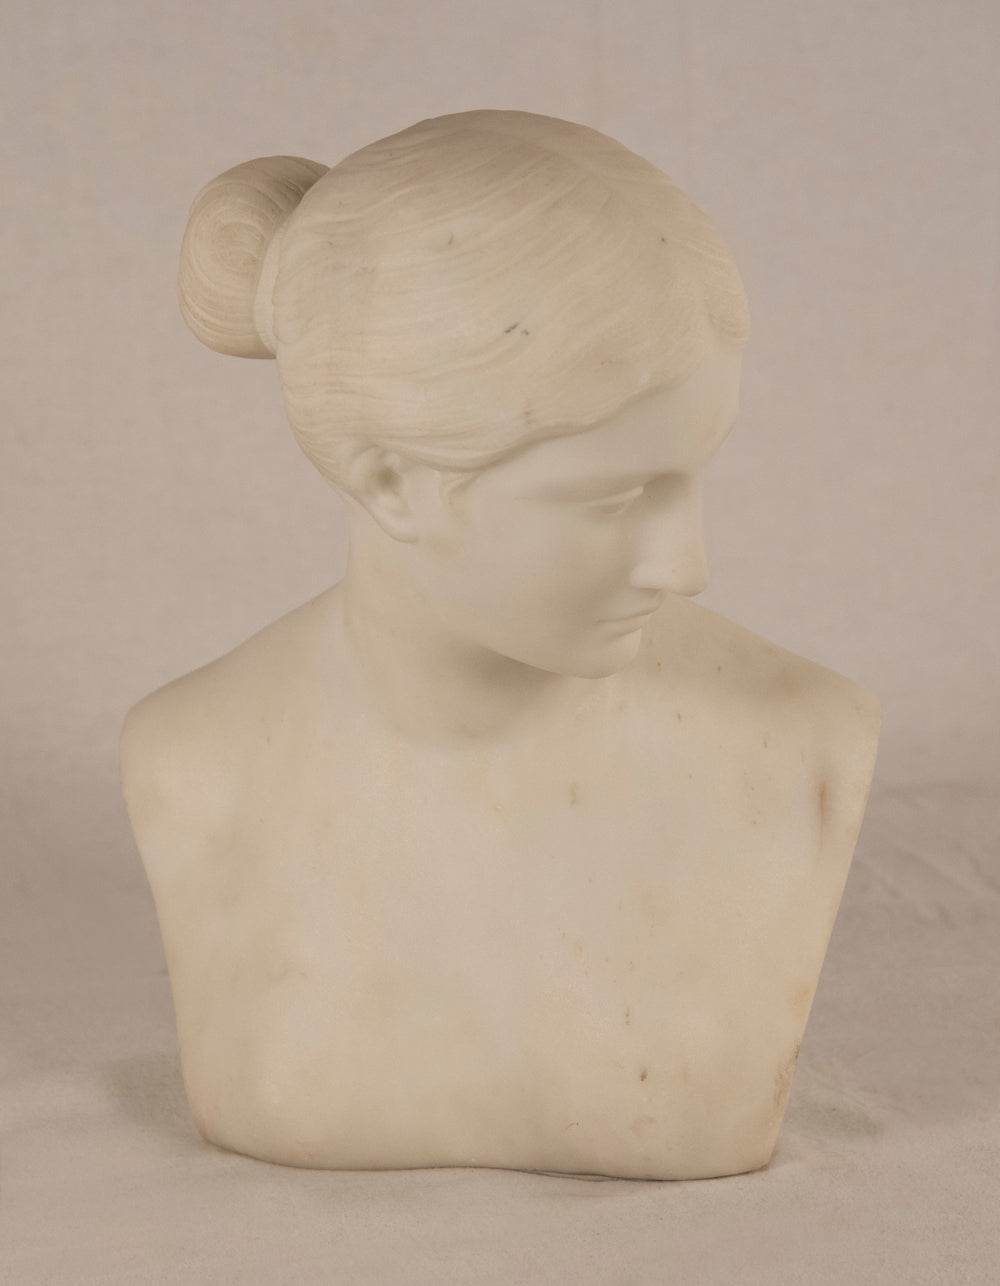 Bust of "Greek Slave" by Hiram Powers